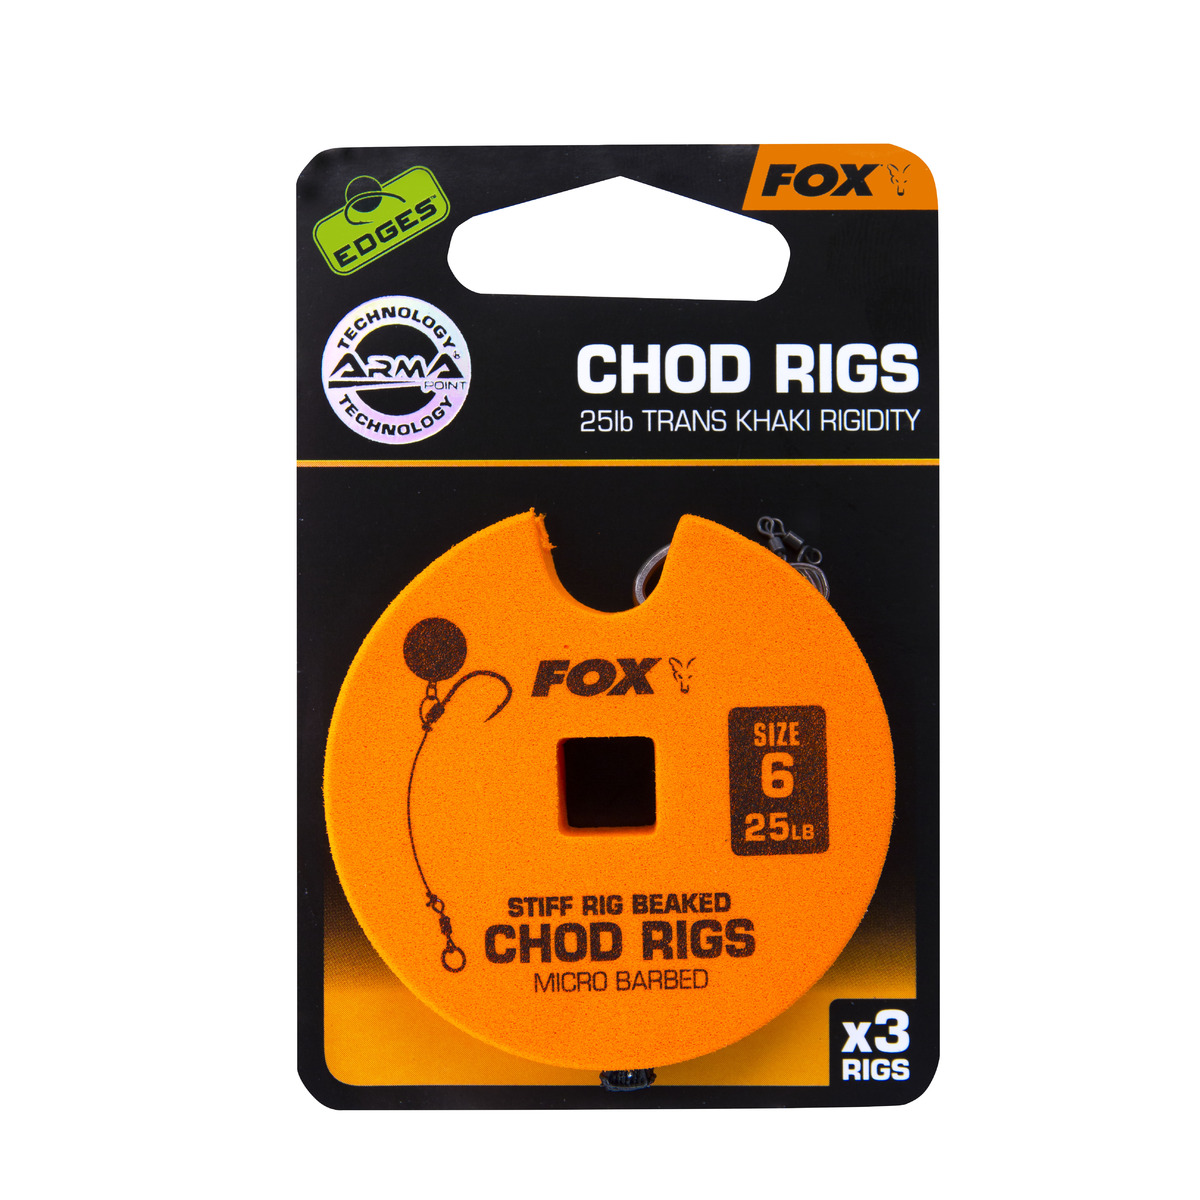 Fox Edges Chod Rigs - Standard - 25lb, Size 6